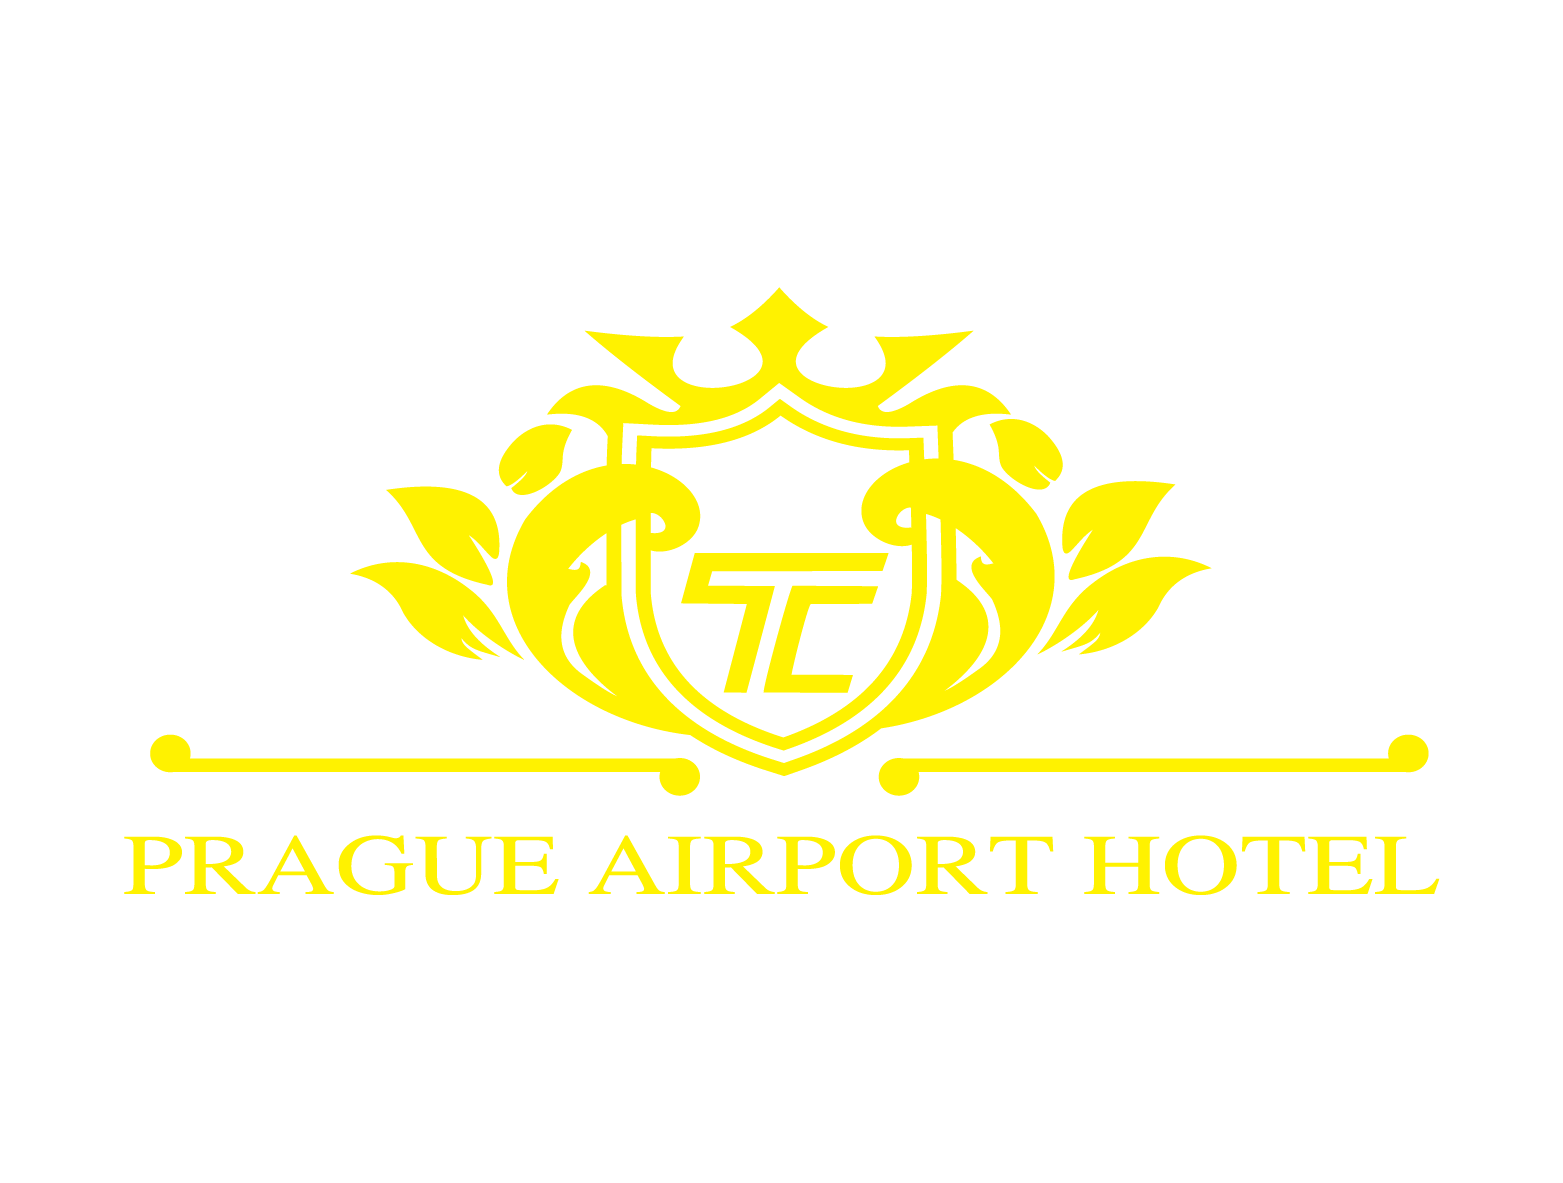 Prague Airport Hotel